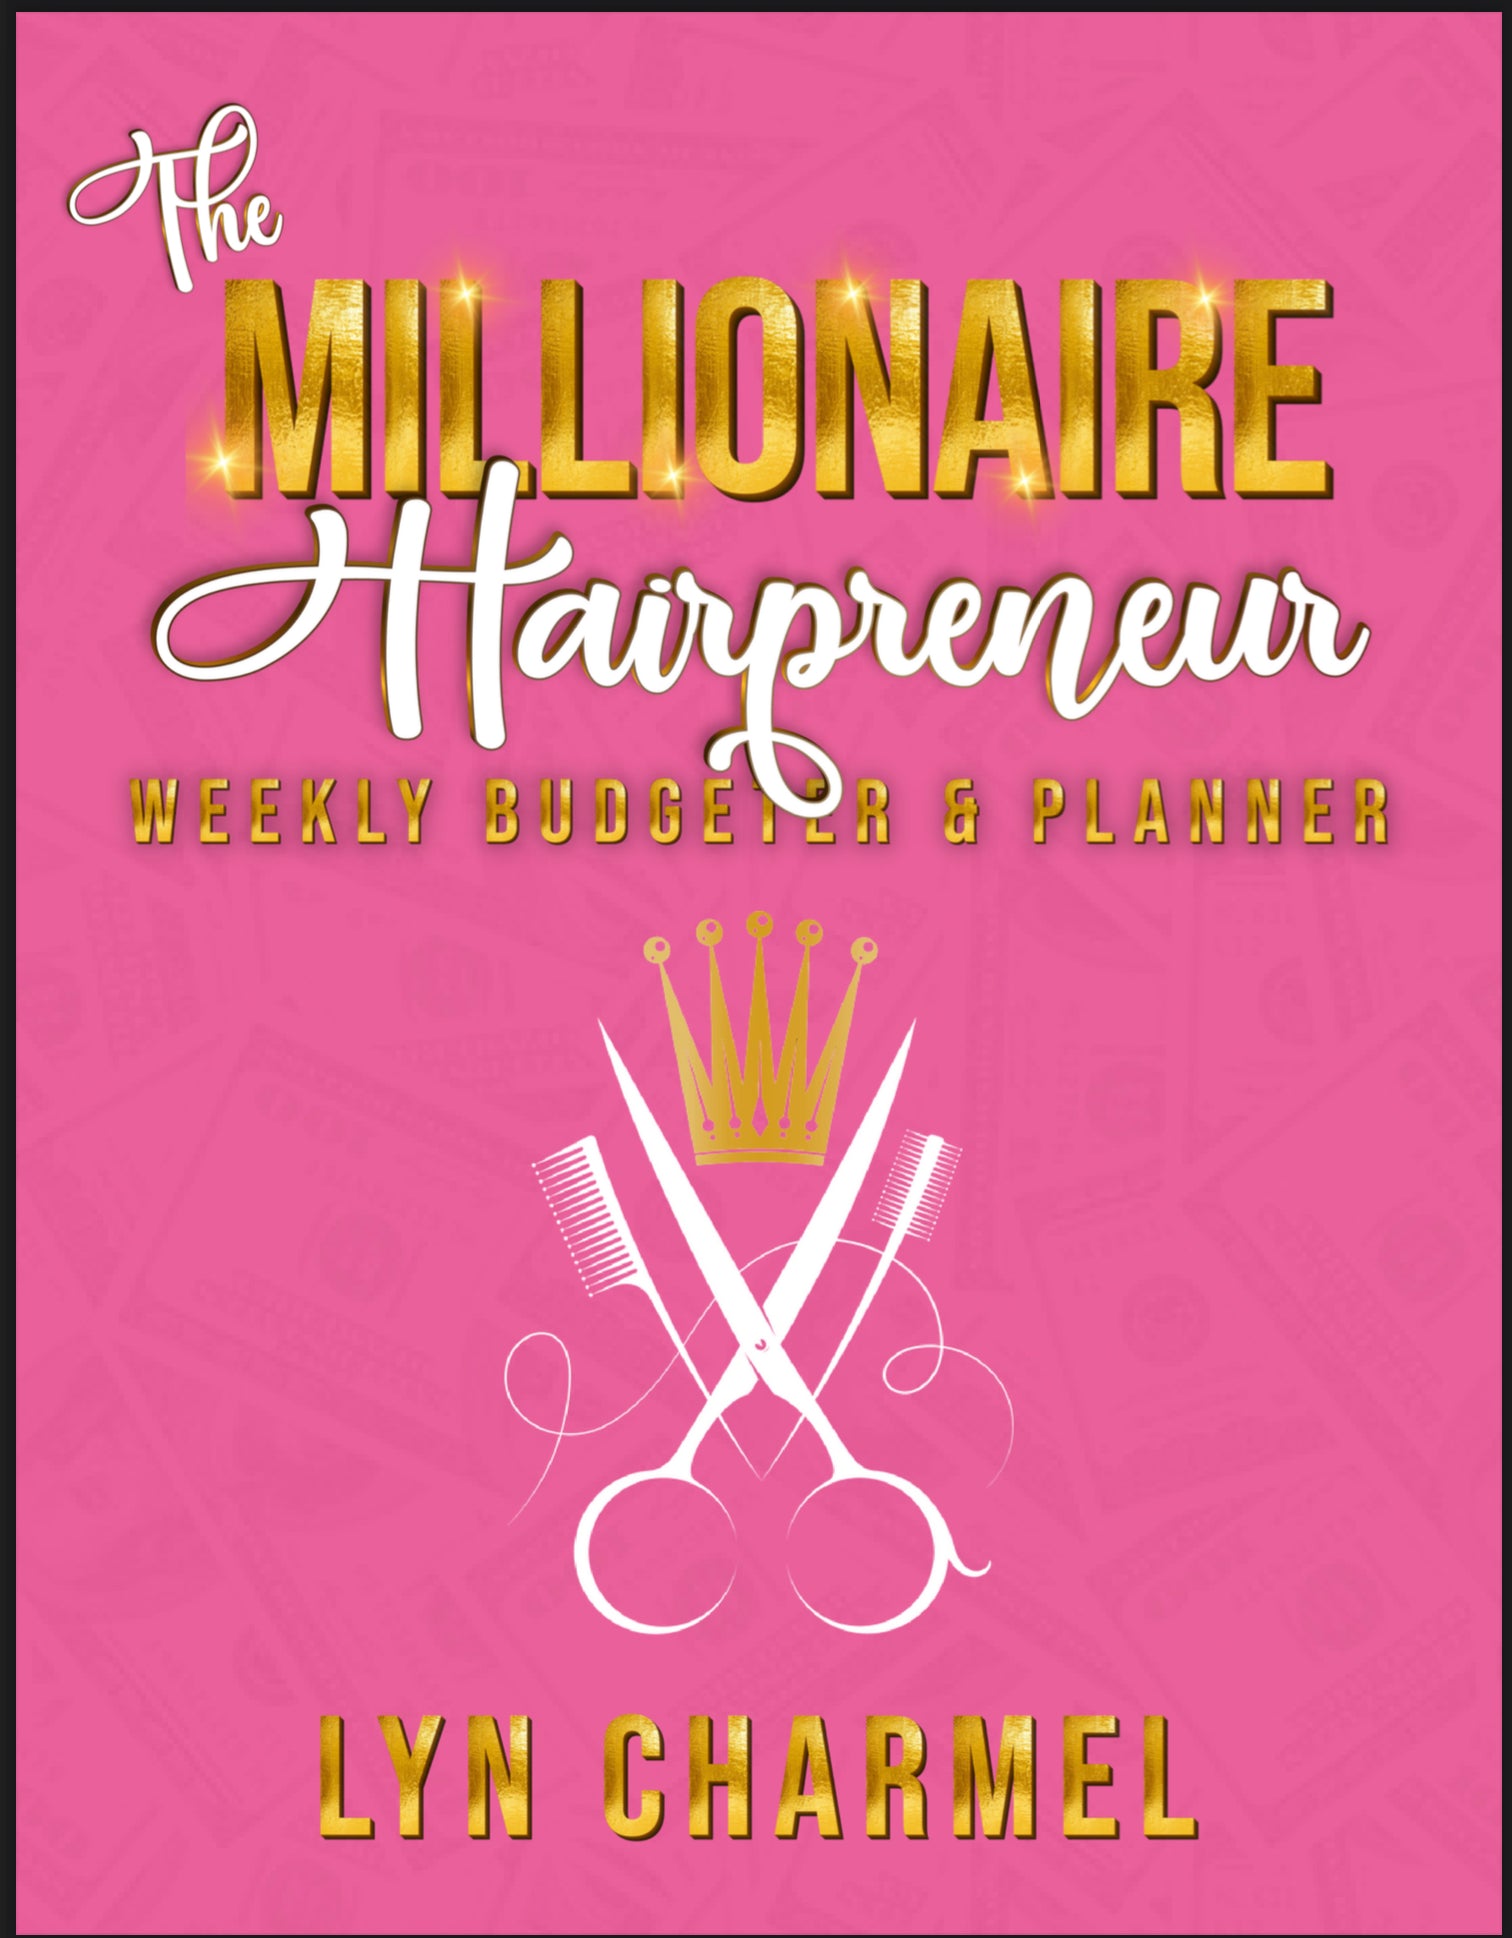 The Millionaire Hairpreneur Budgeter & Planner